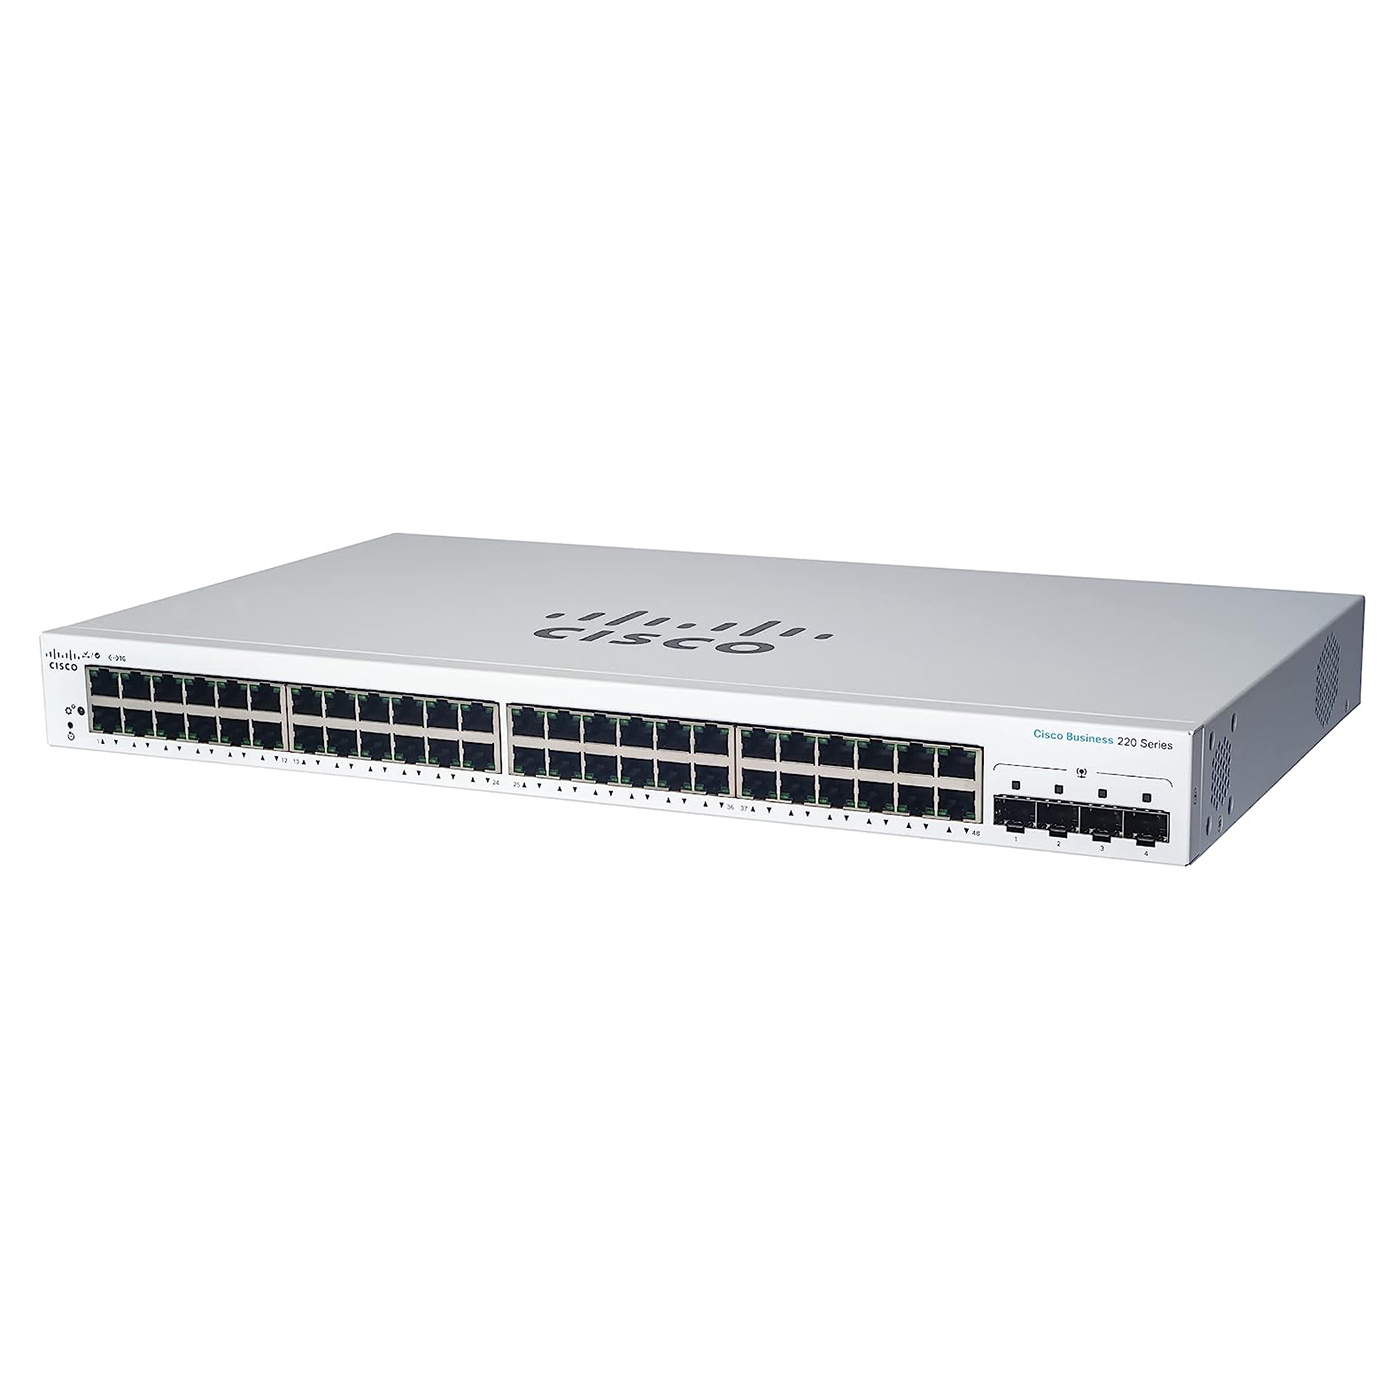 Cisco CBS220-48T-4G 52 Port Gigabit Smart Switch